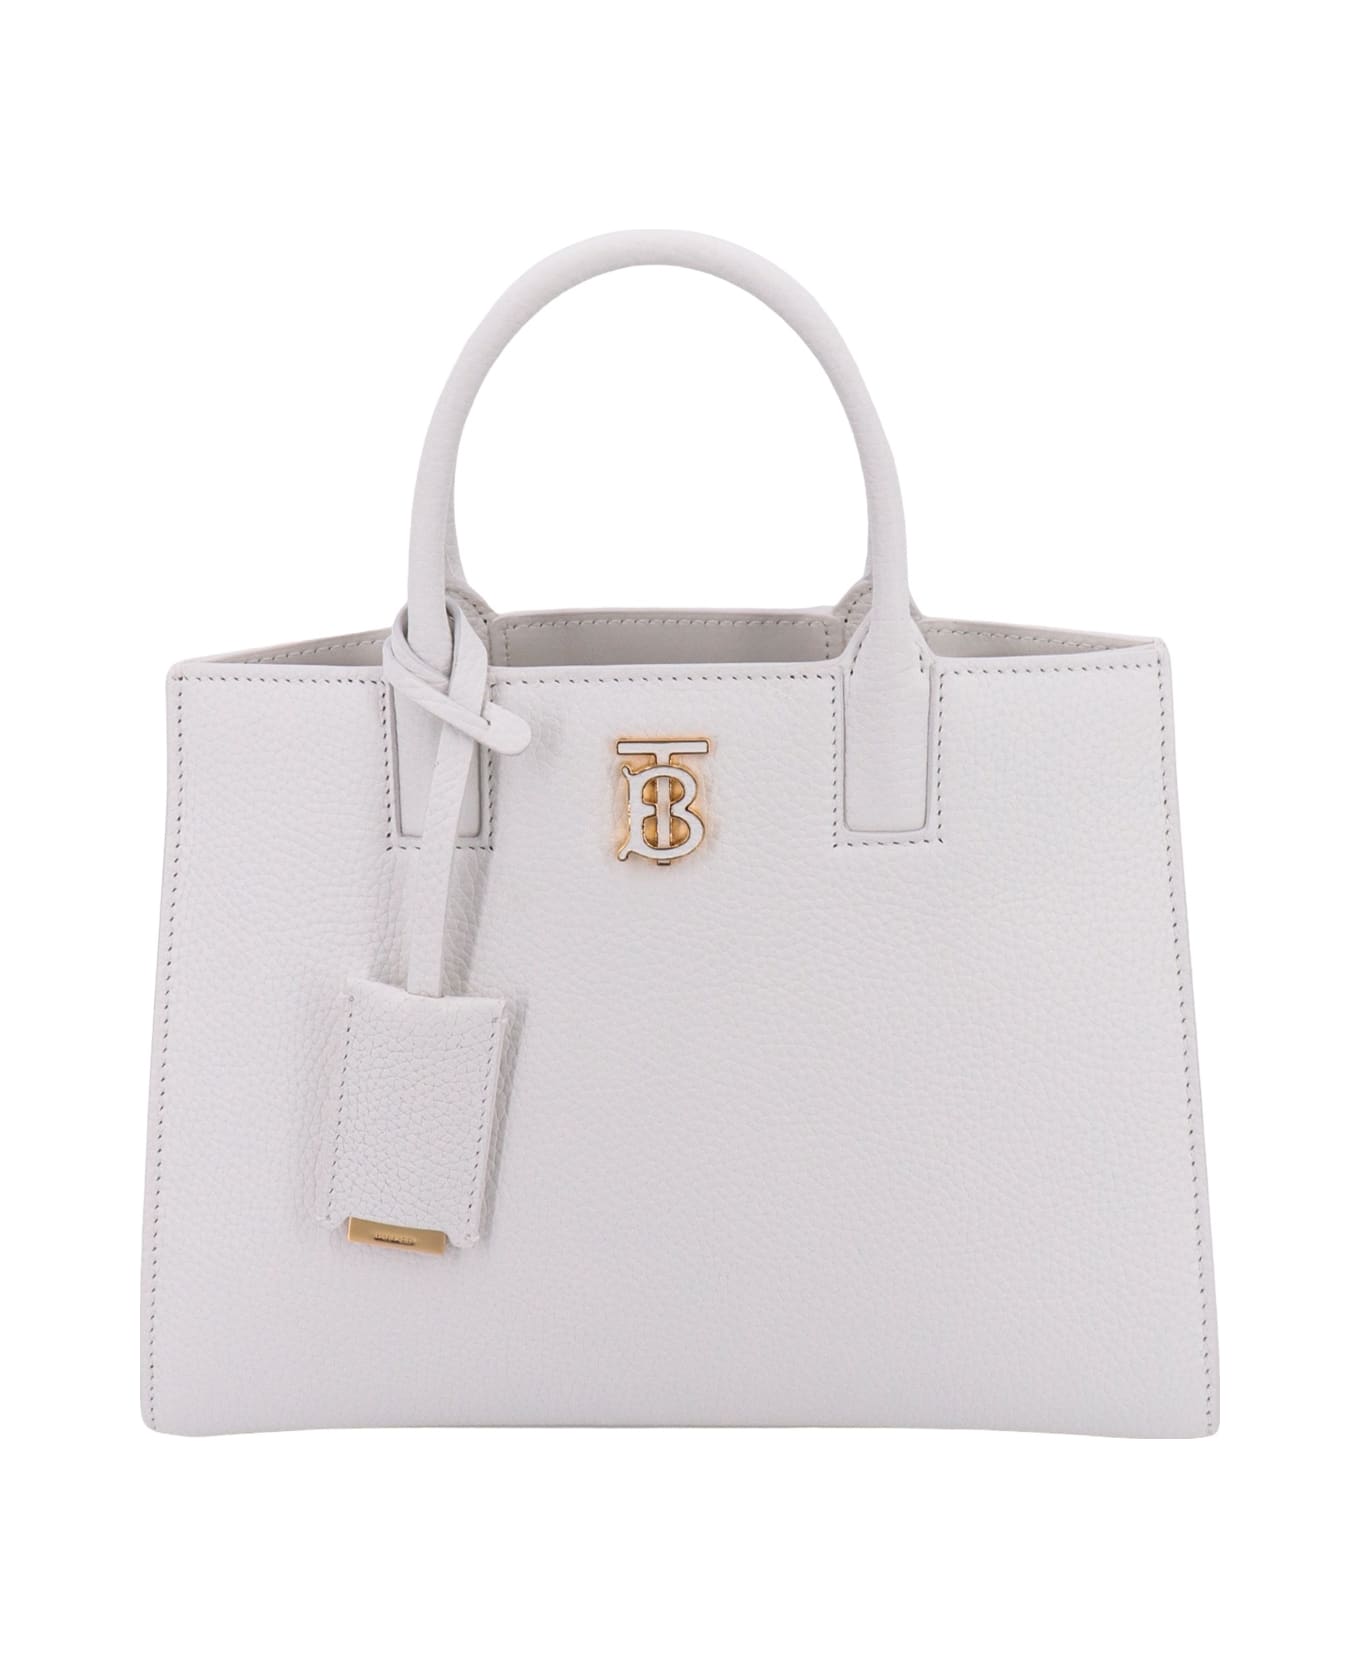 Burberry Frances Mini Handbag - White